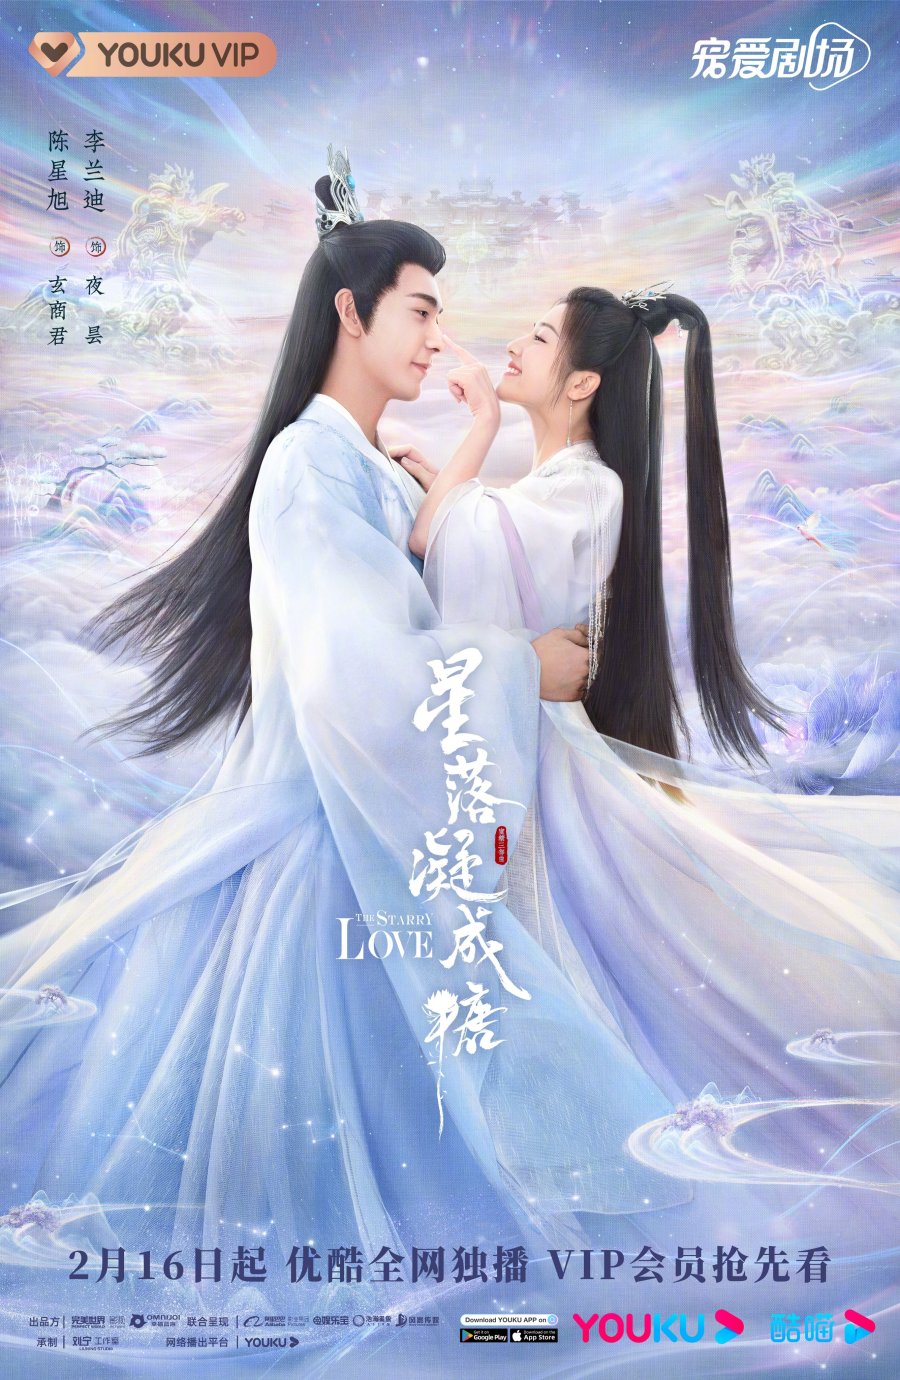 My Queen (poster)  Film china, Drama film, Korean couple